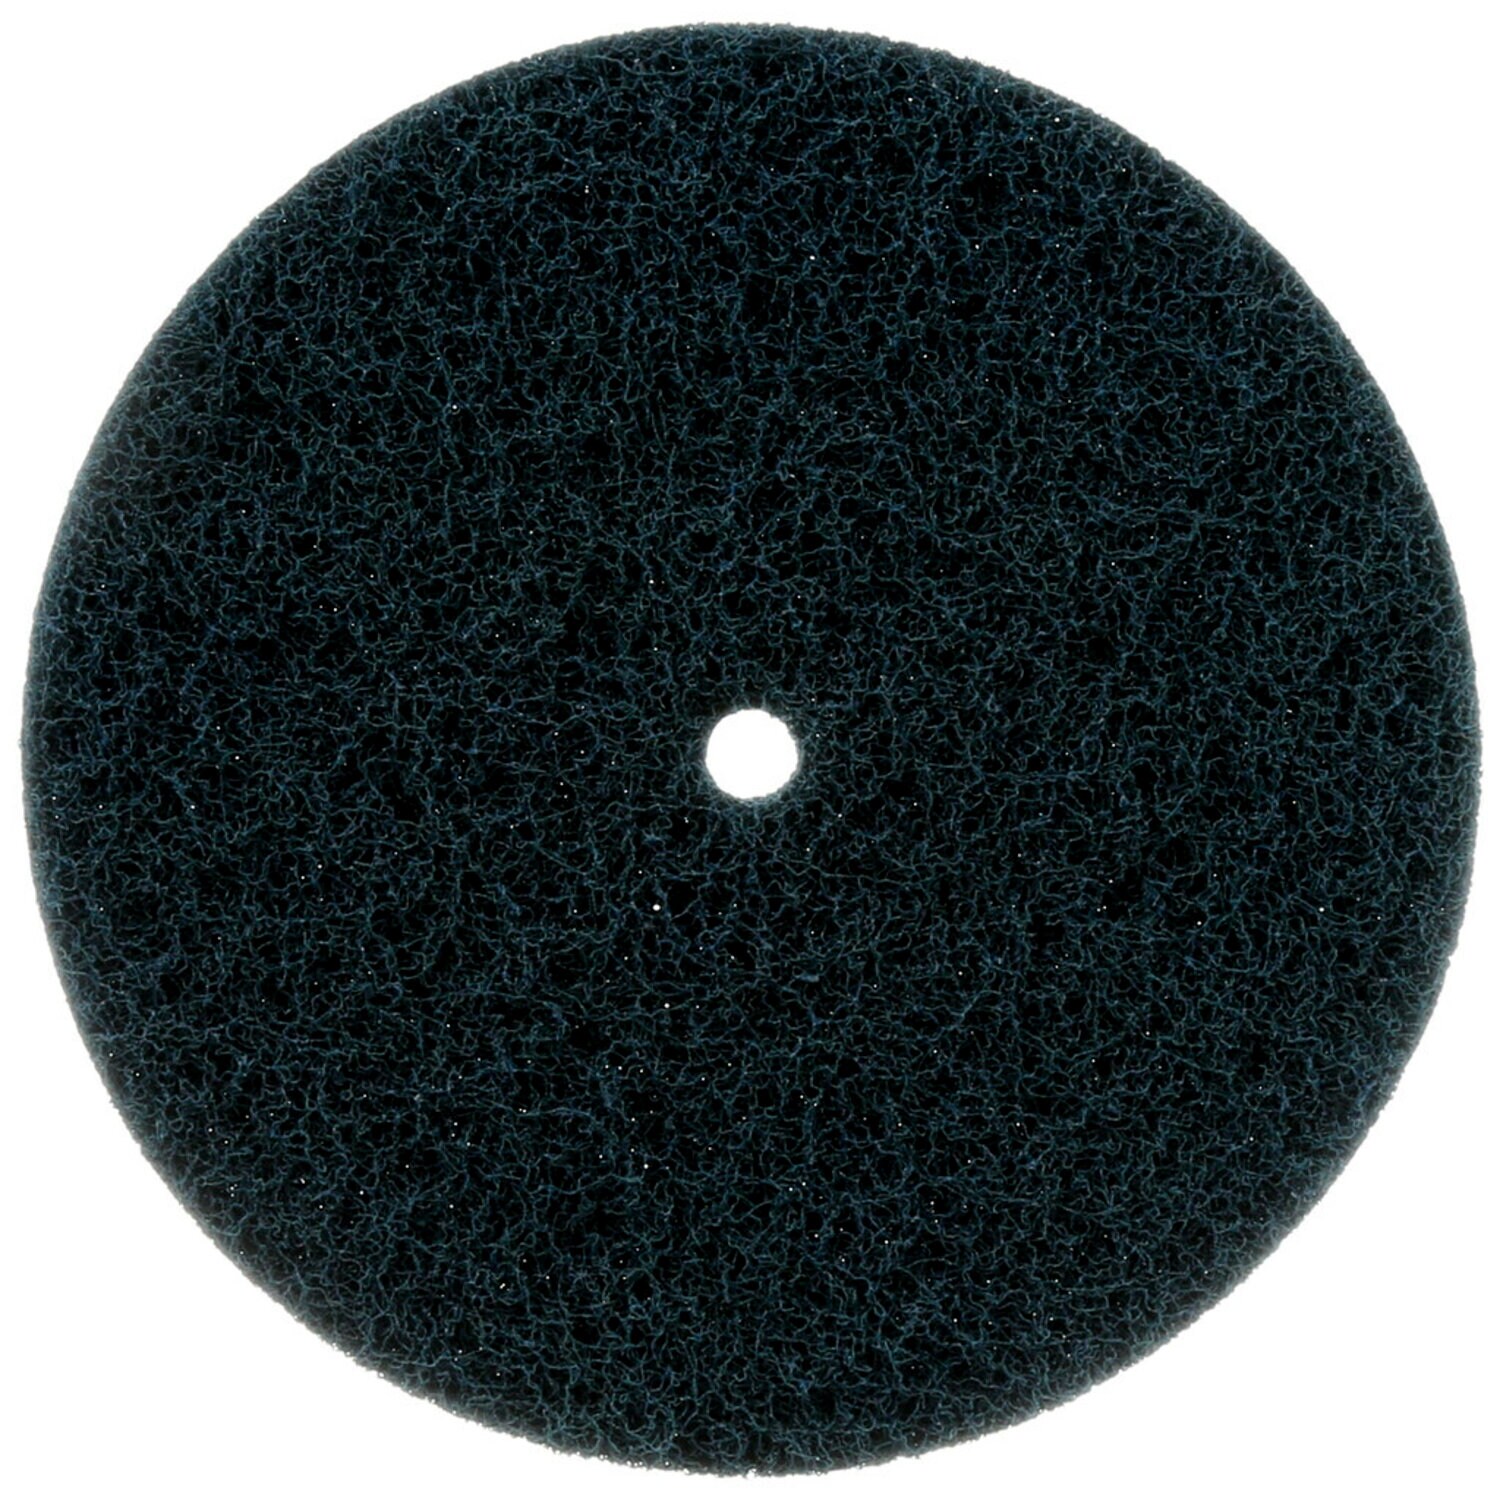 7010330893 - Standard Abrasives Buff and Blend HS Disc, 814022, 14 in x 1 in A MED,
5 ea/Case